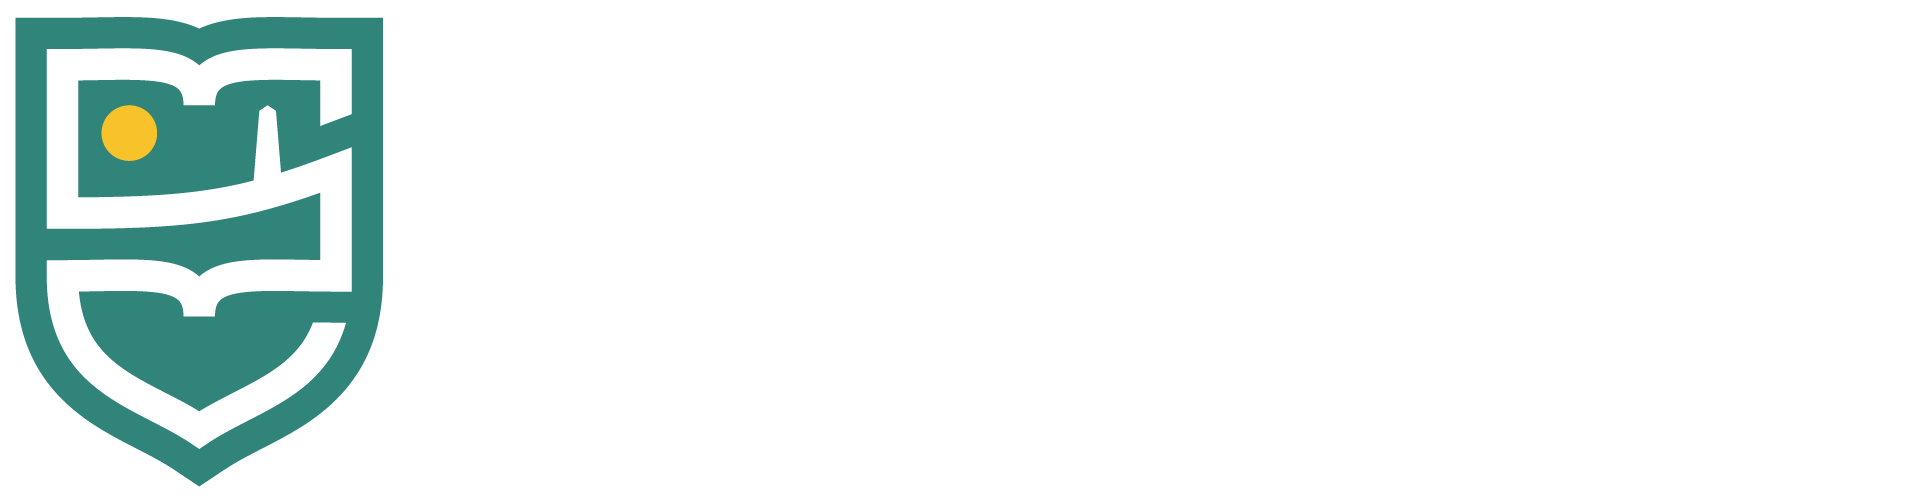 Hill View School